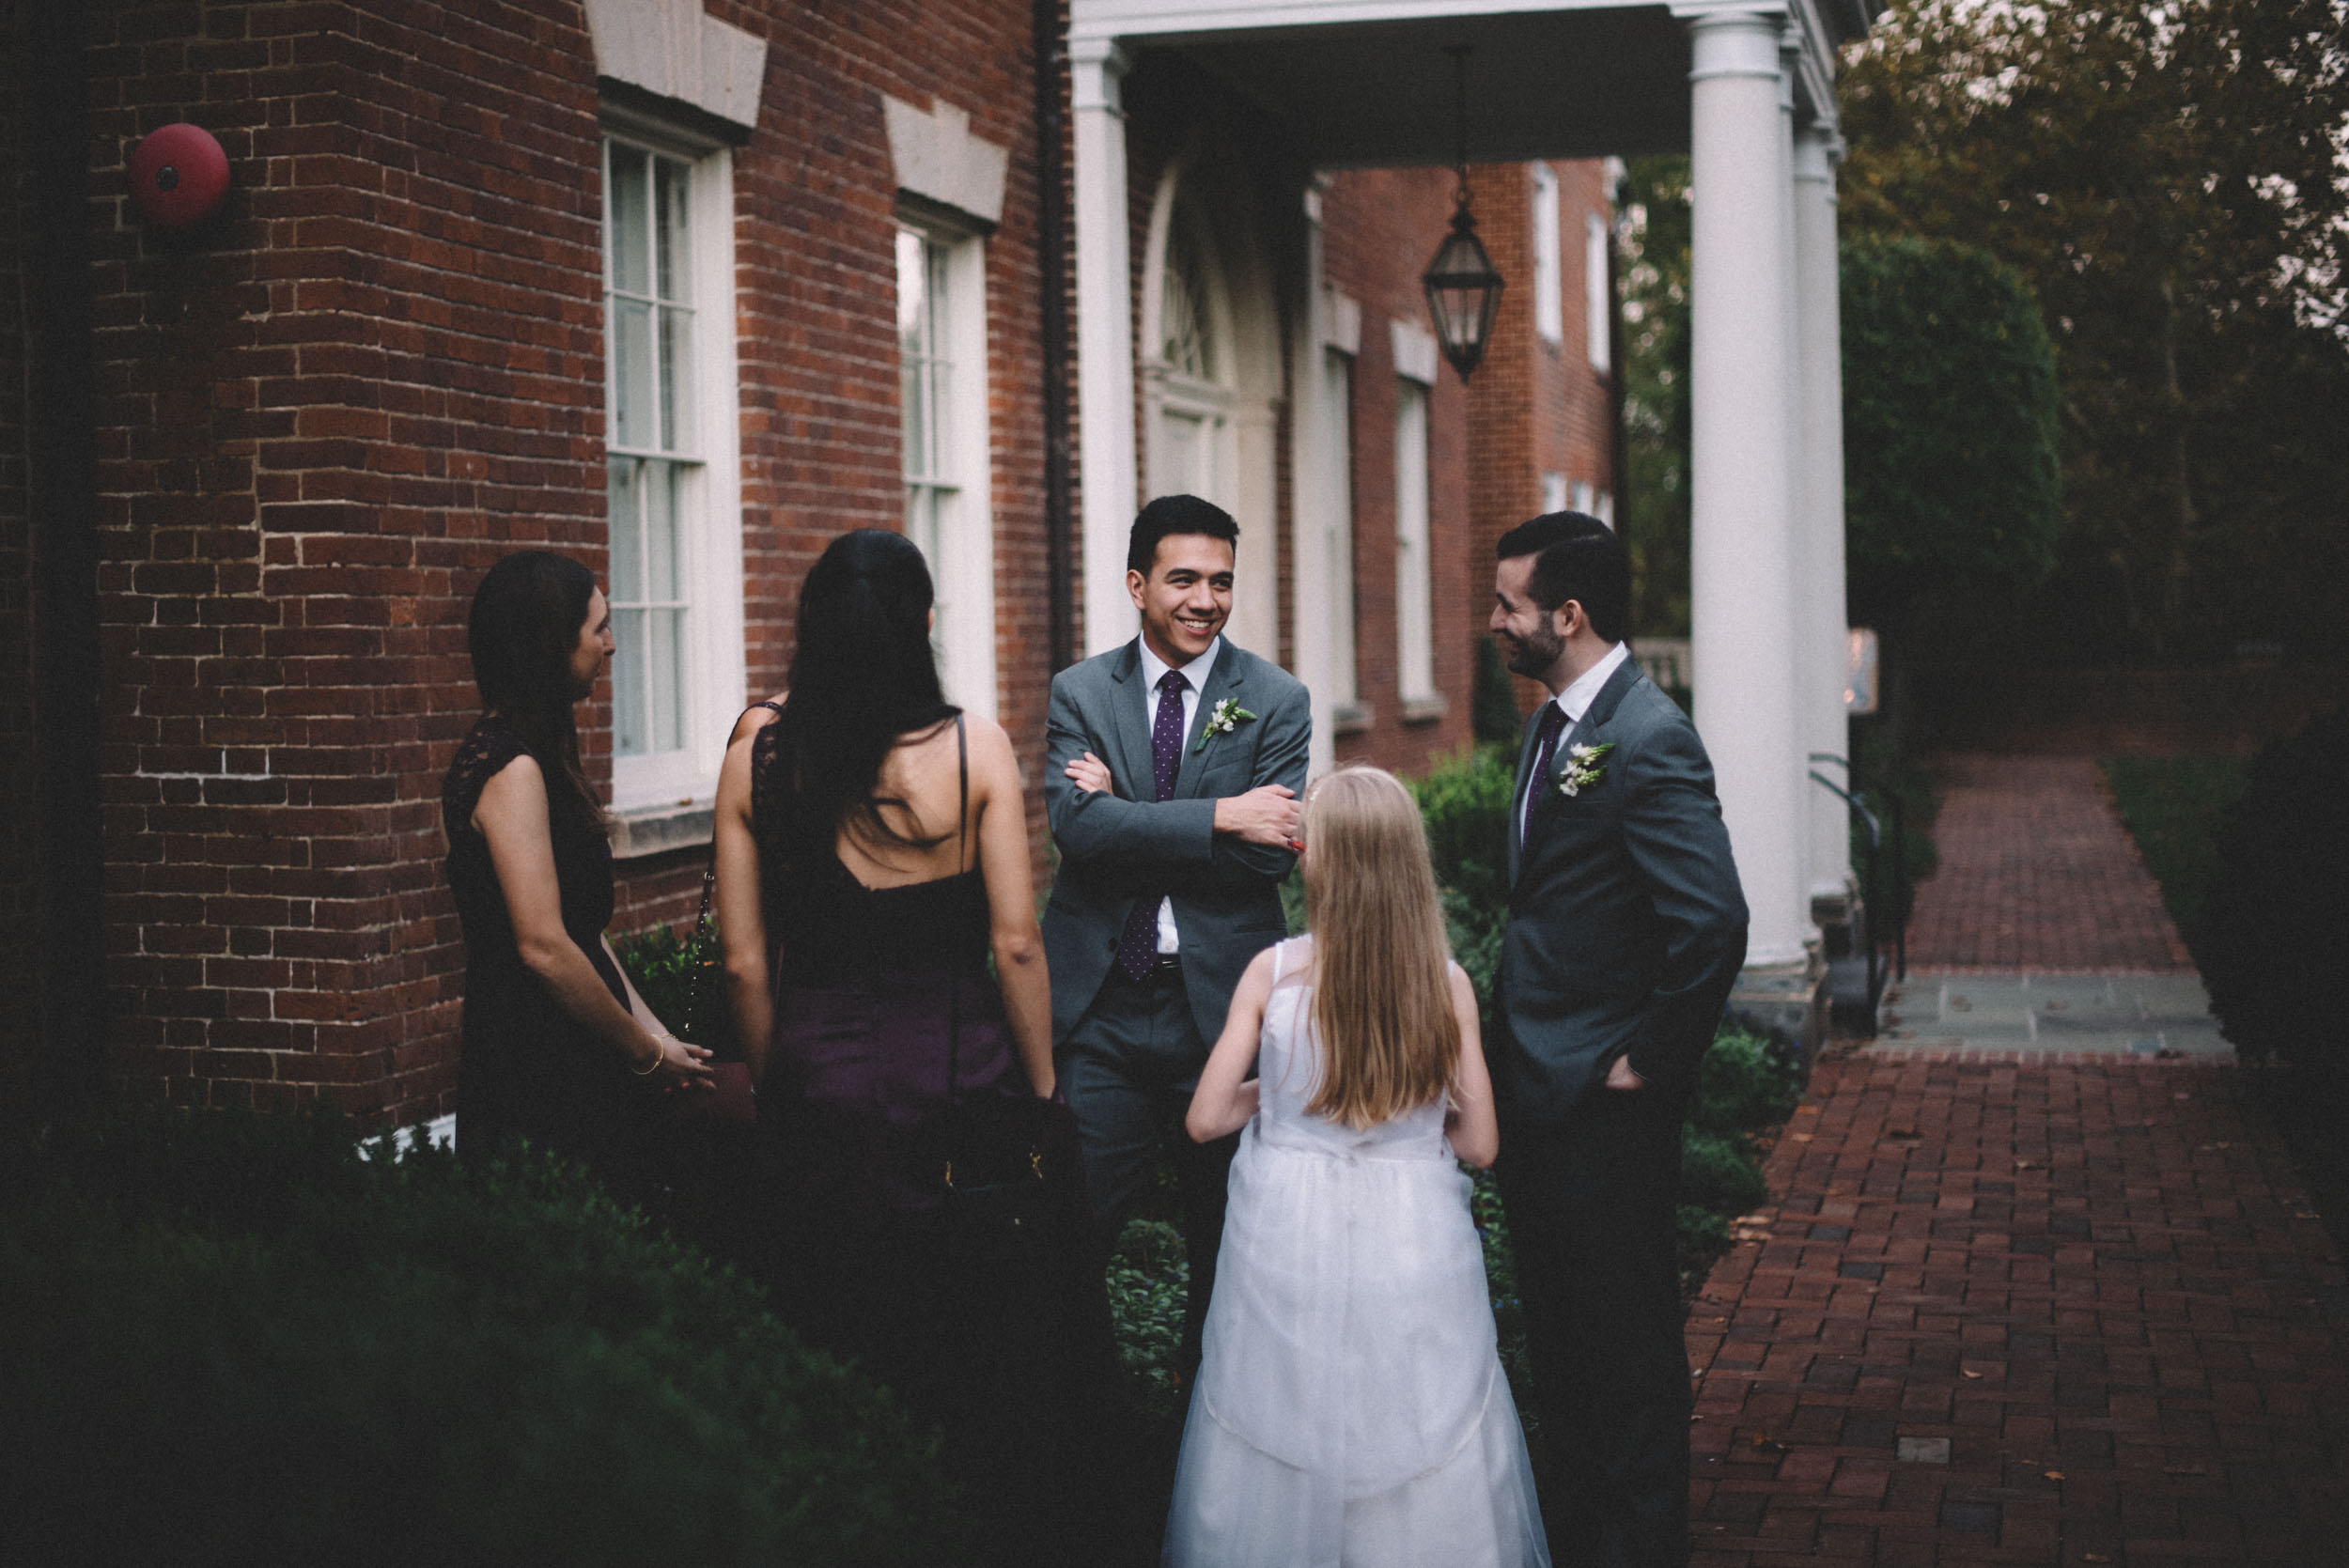 Dumbarton-House-wedding-56.jpg